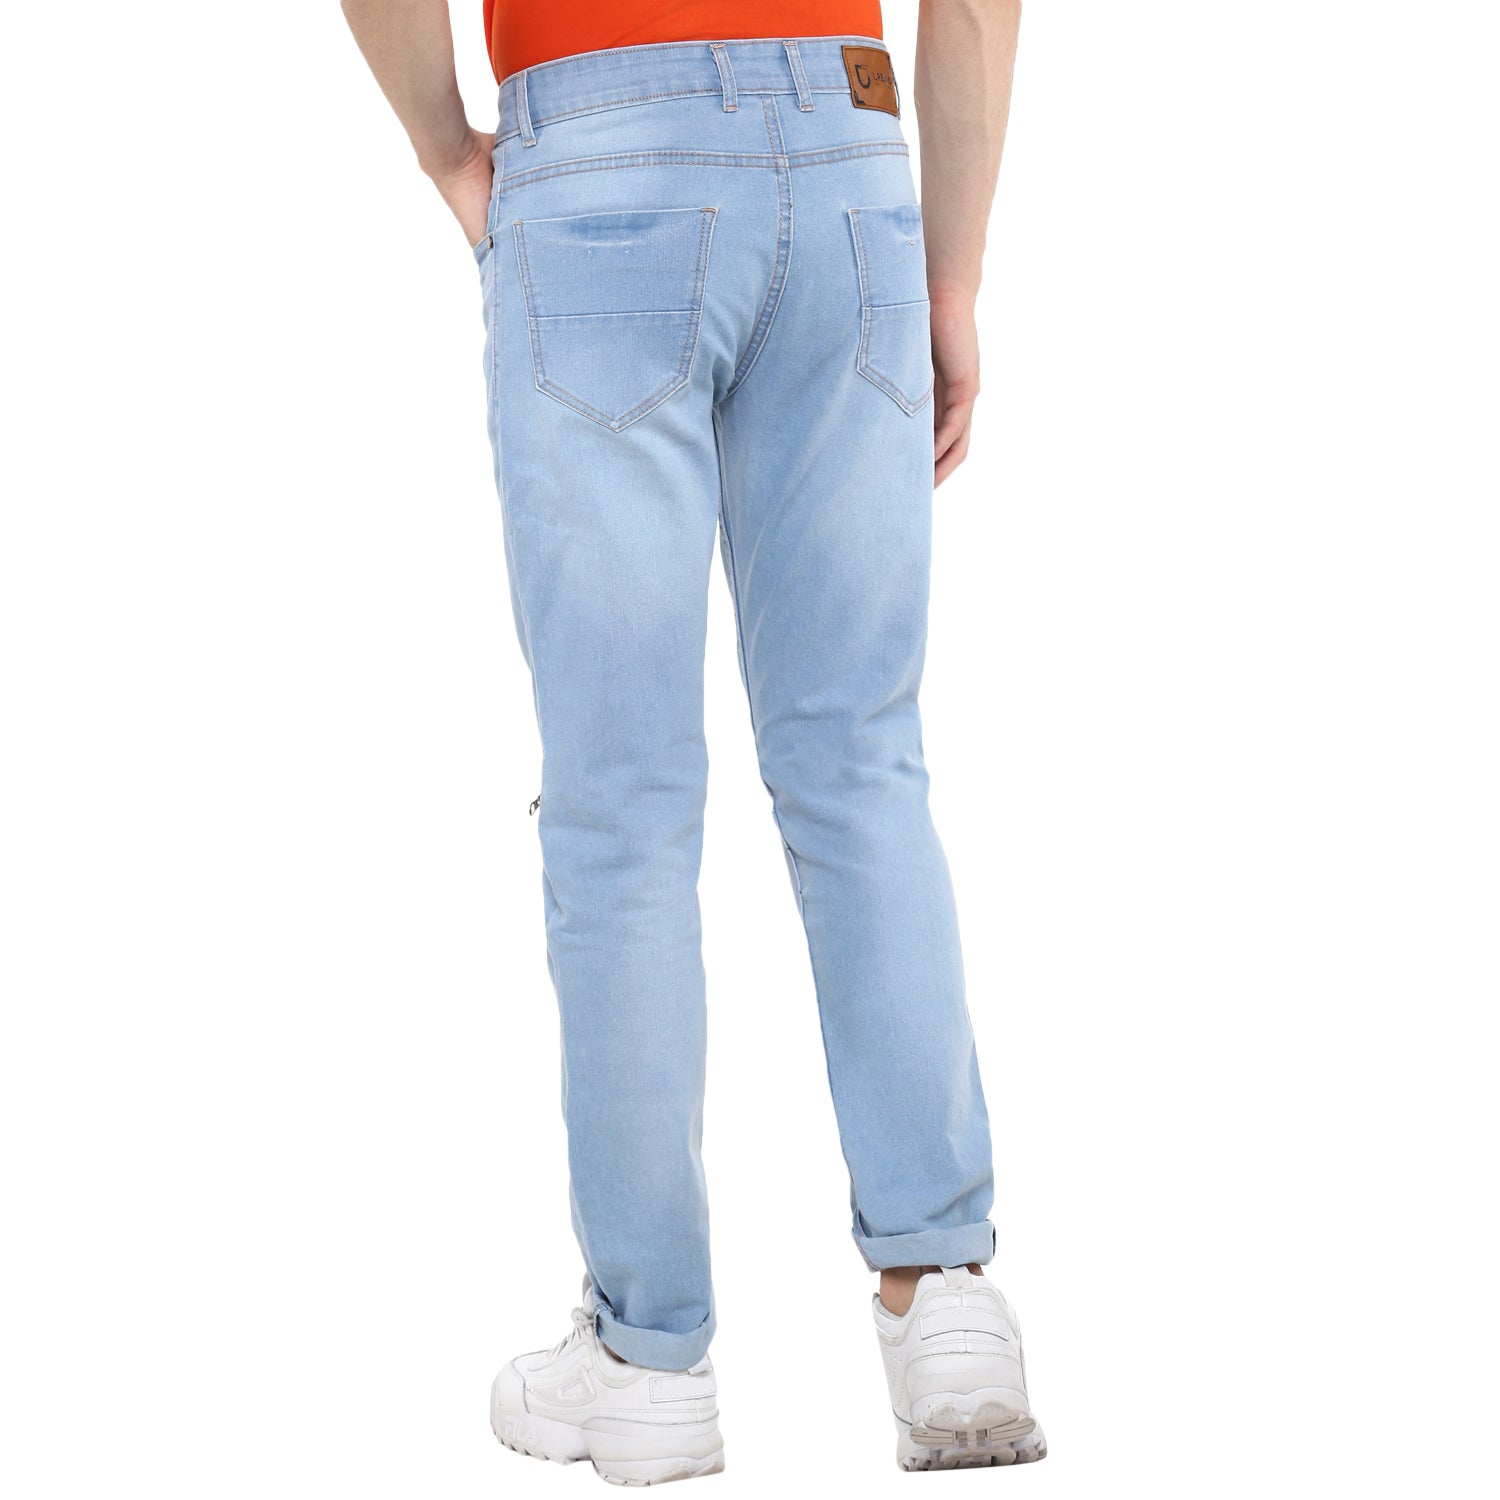 Urbano Fashion Men's Ice Blue Slim Fit Zippered Jeans Stretch